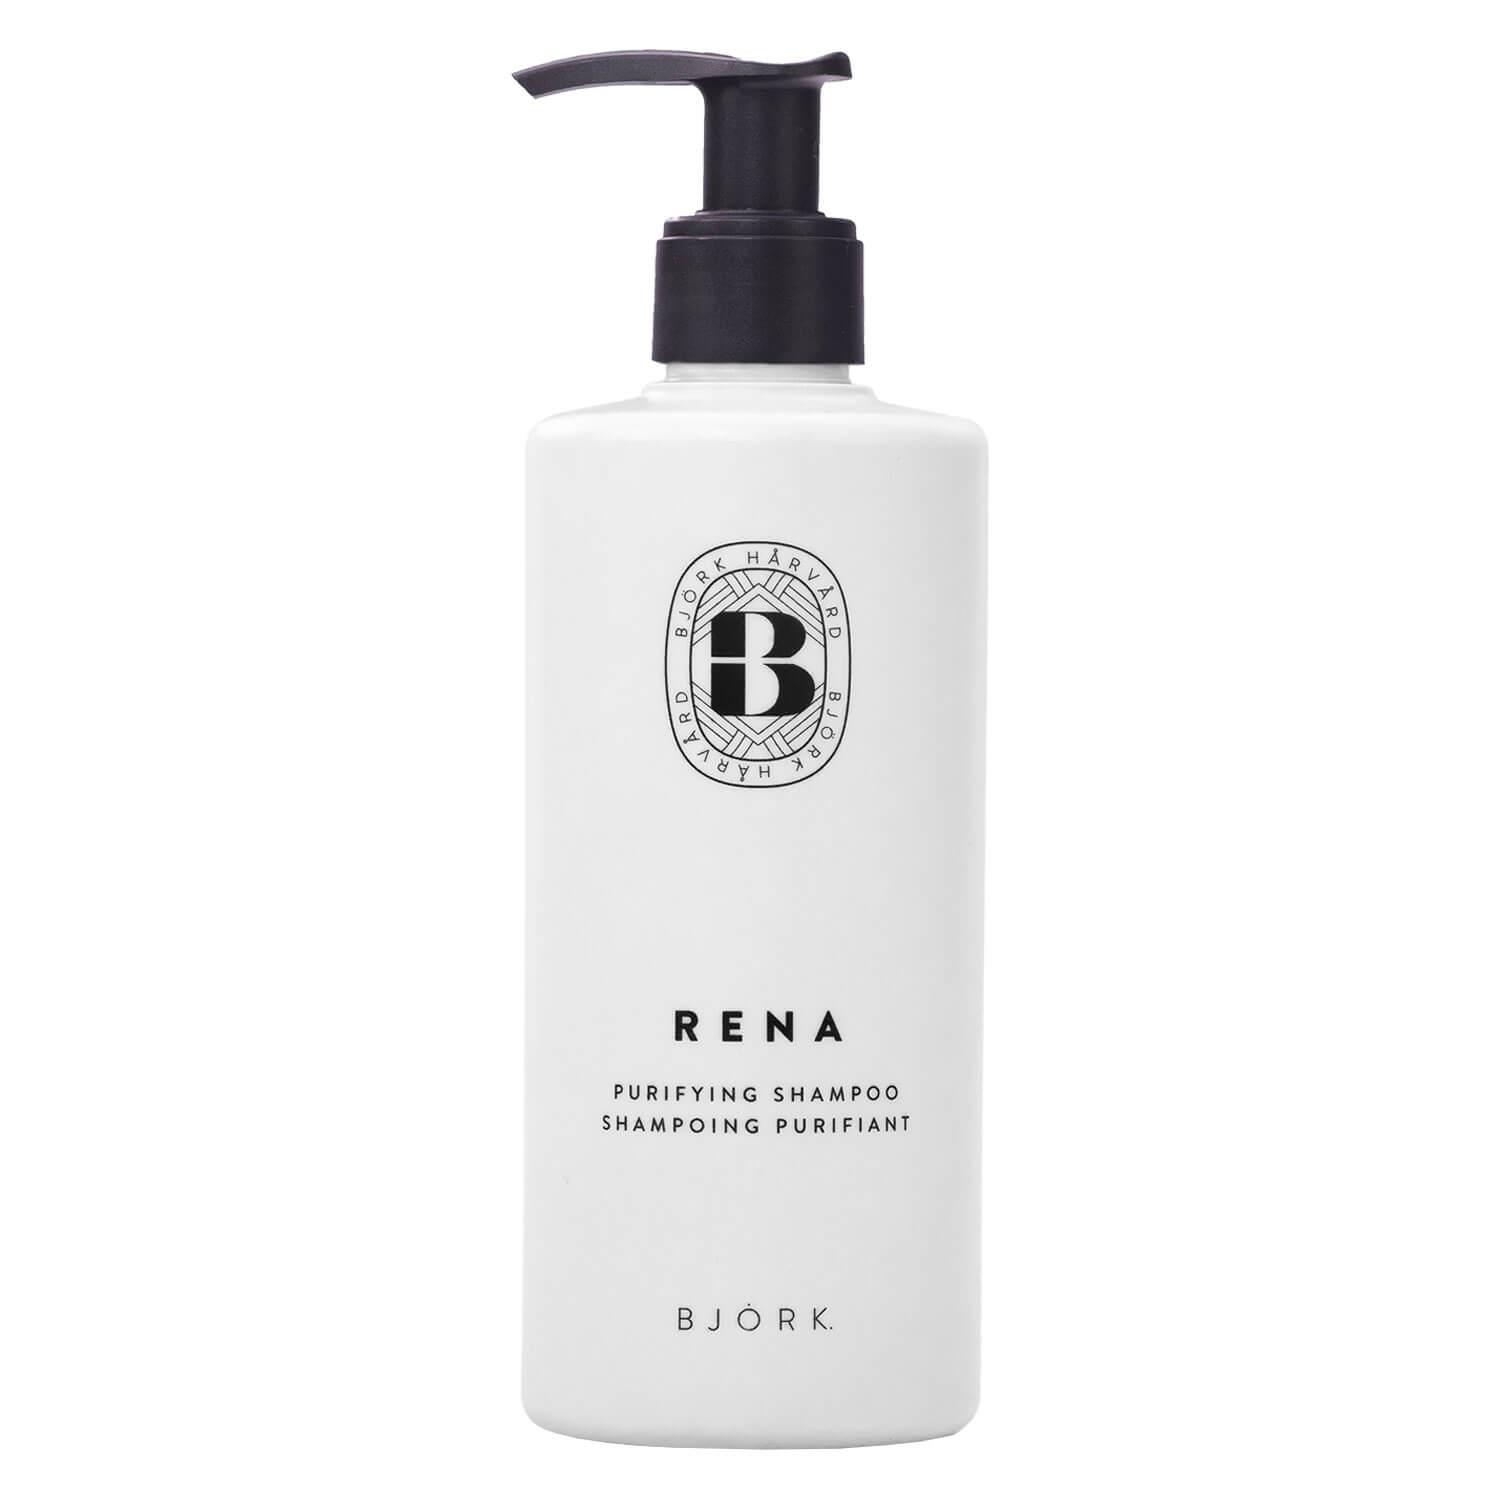 BJÖRK - Rena Purifying Shampoo